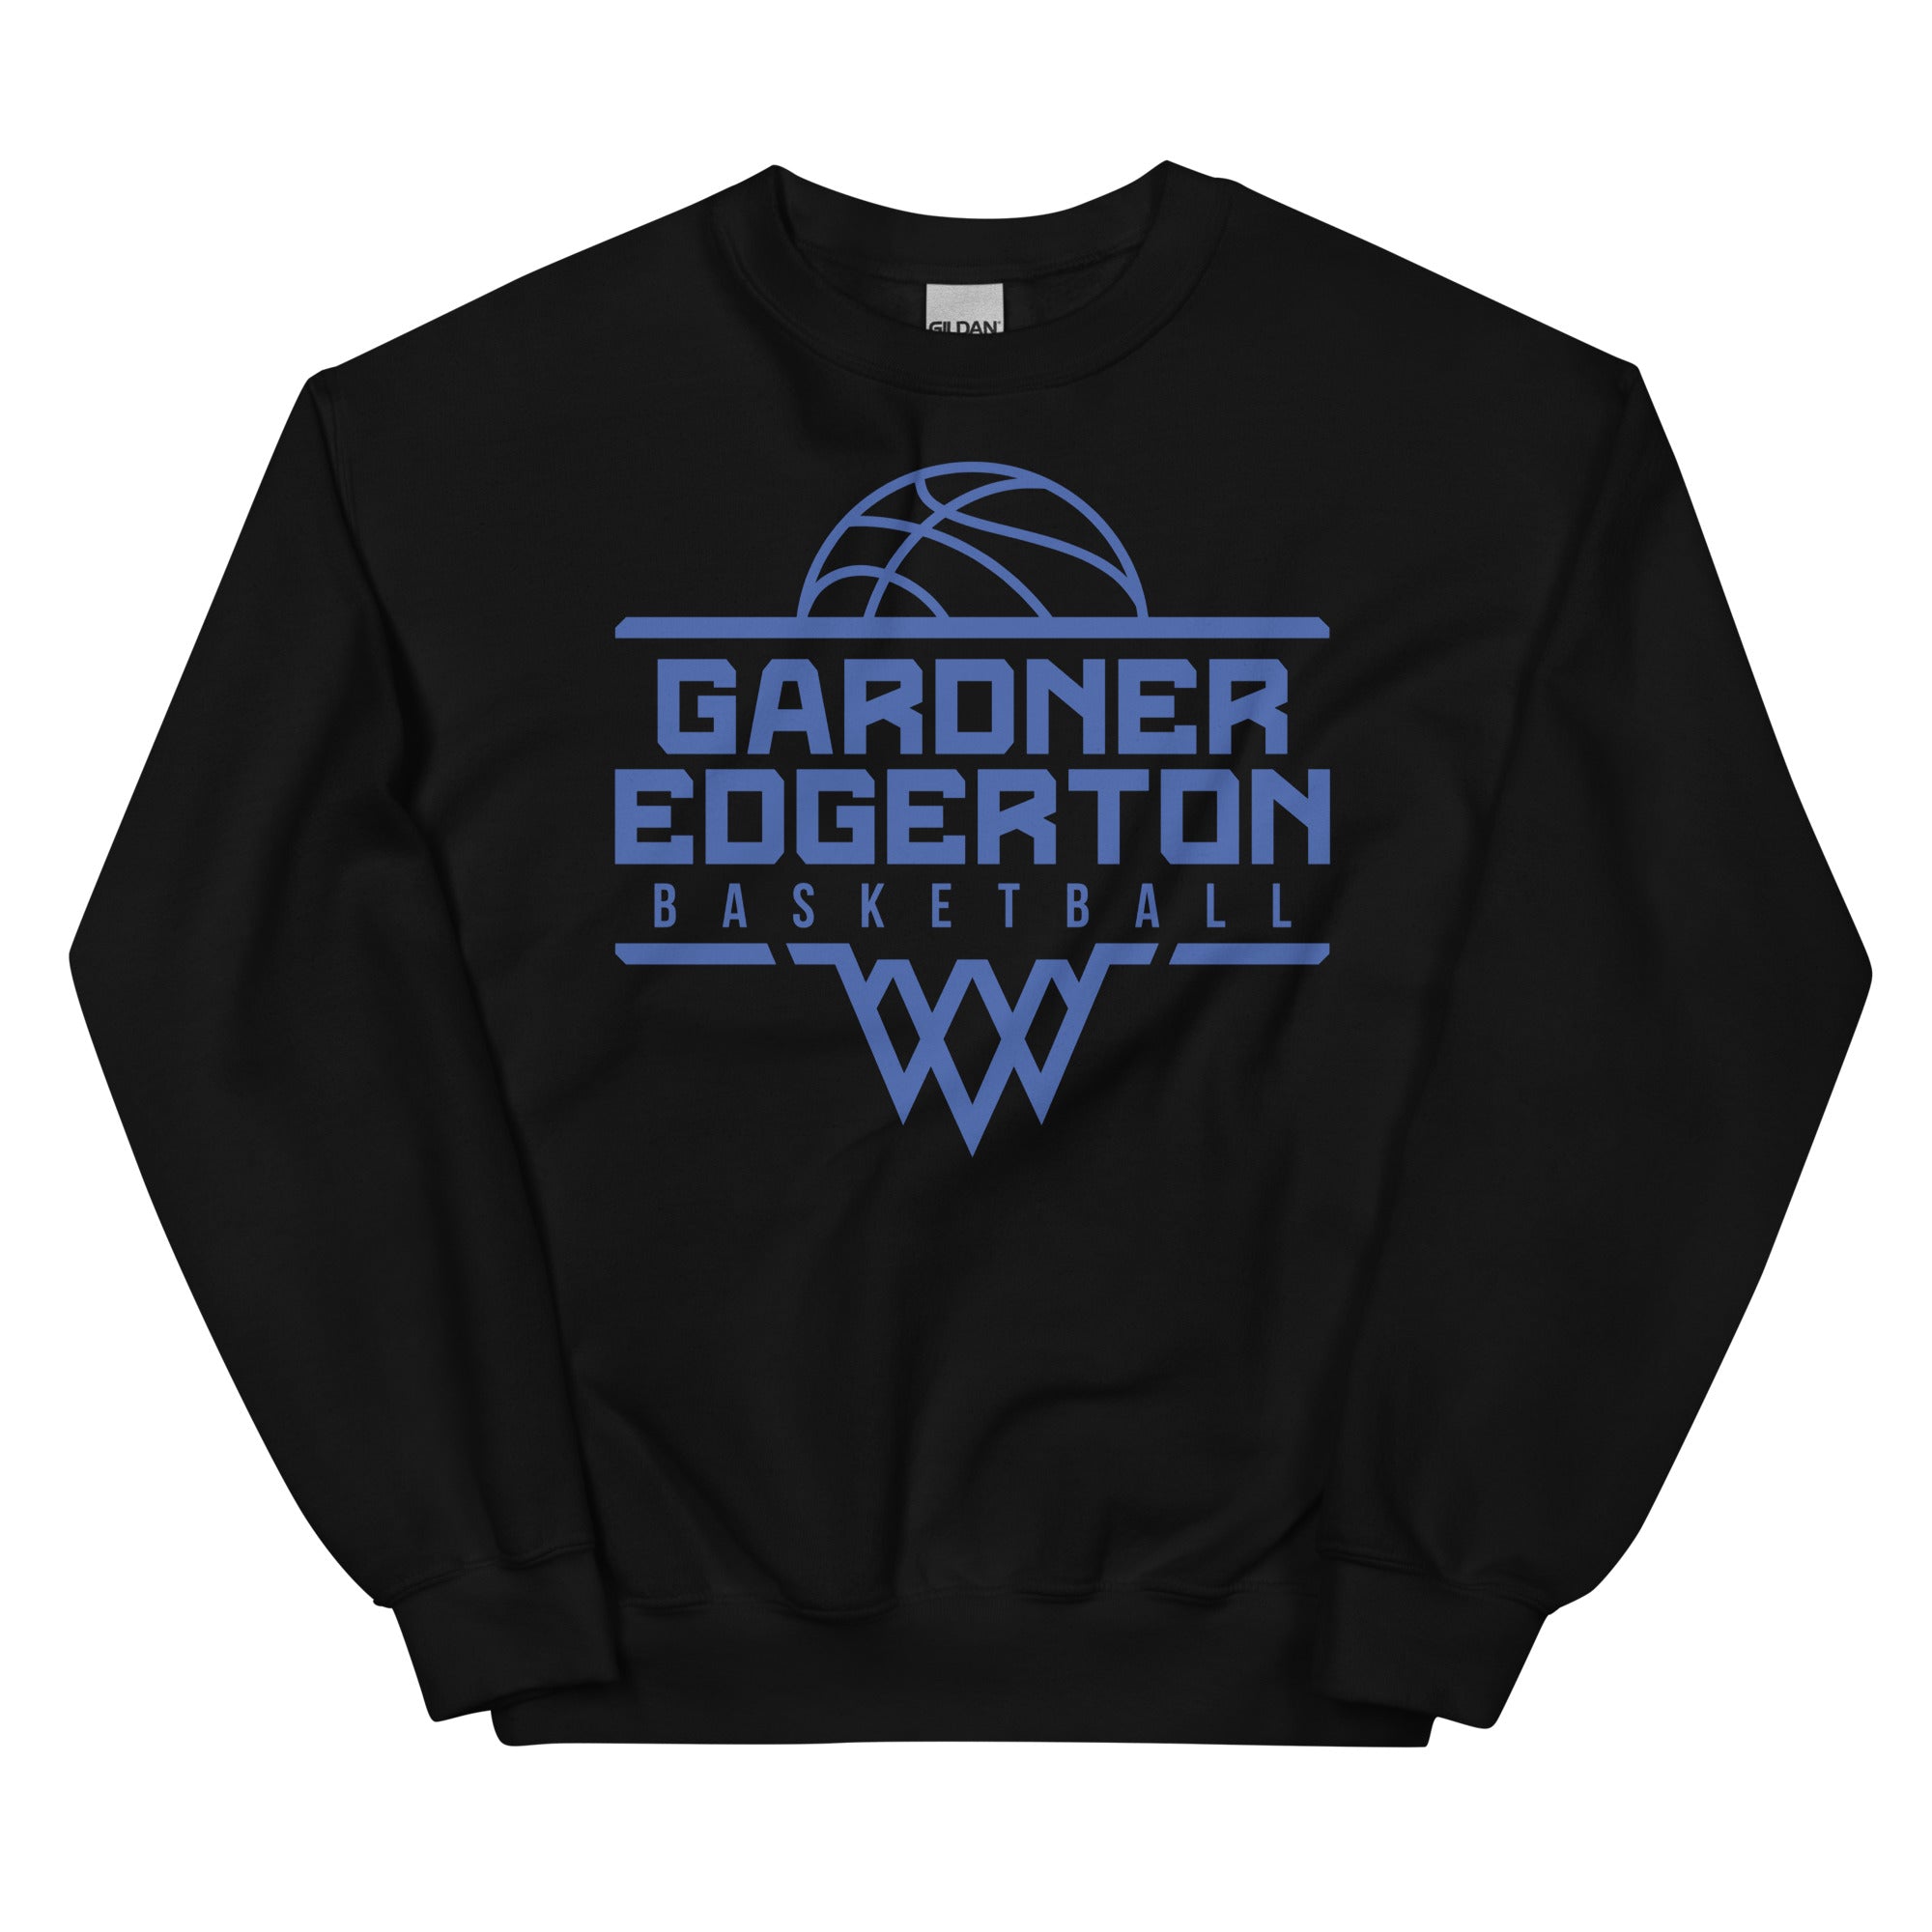 Gardner Edgerton Girl's Basketball Unisex Crew Neck Sweatshirt